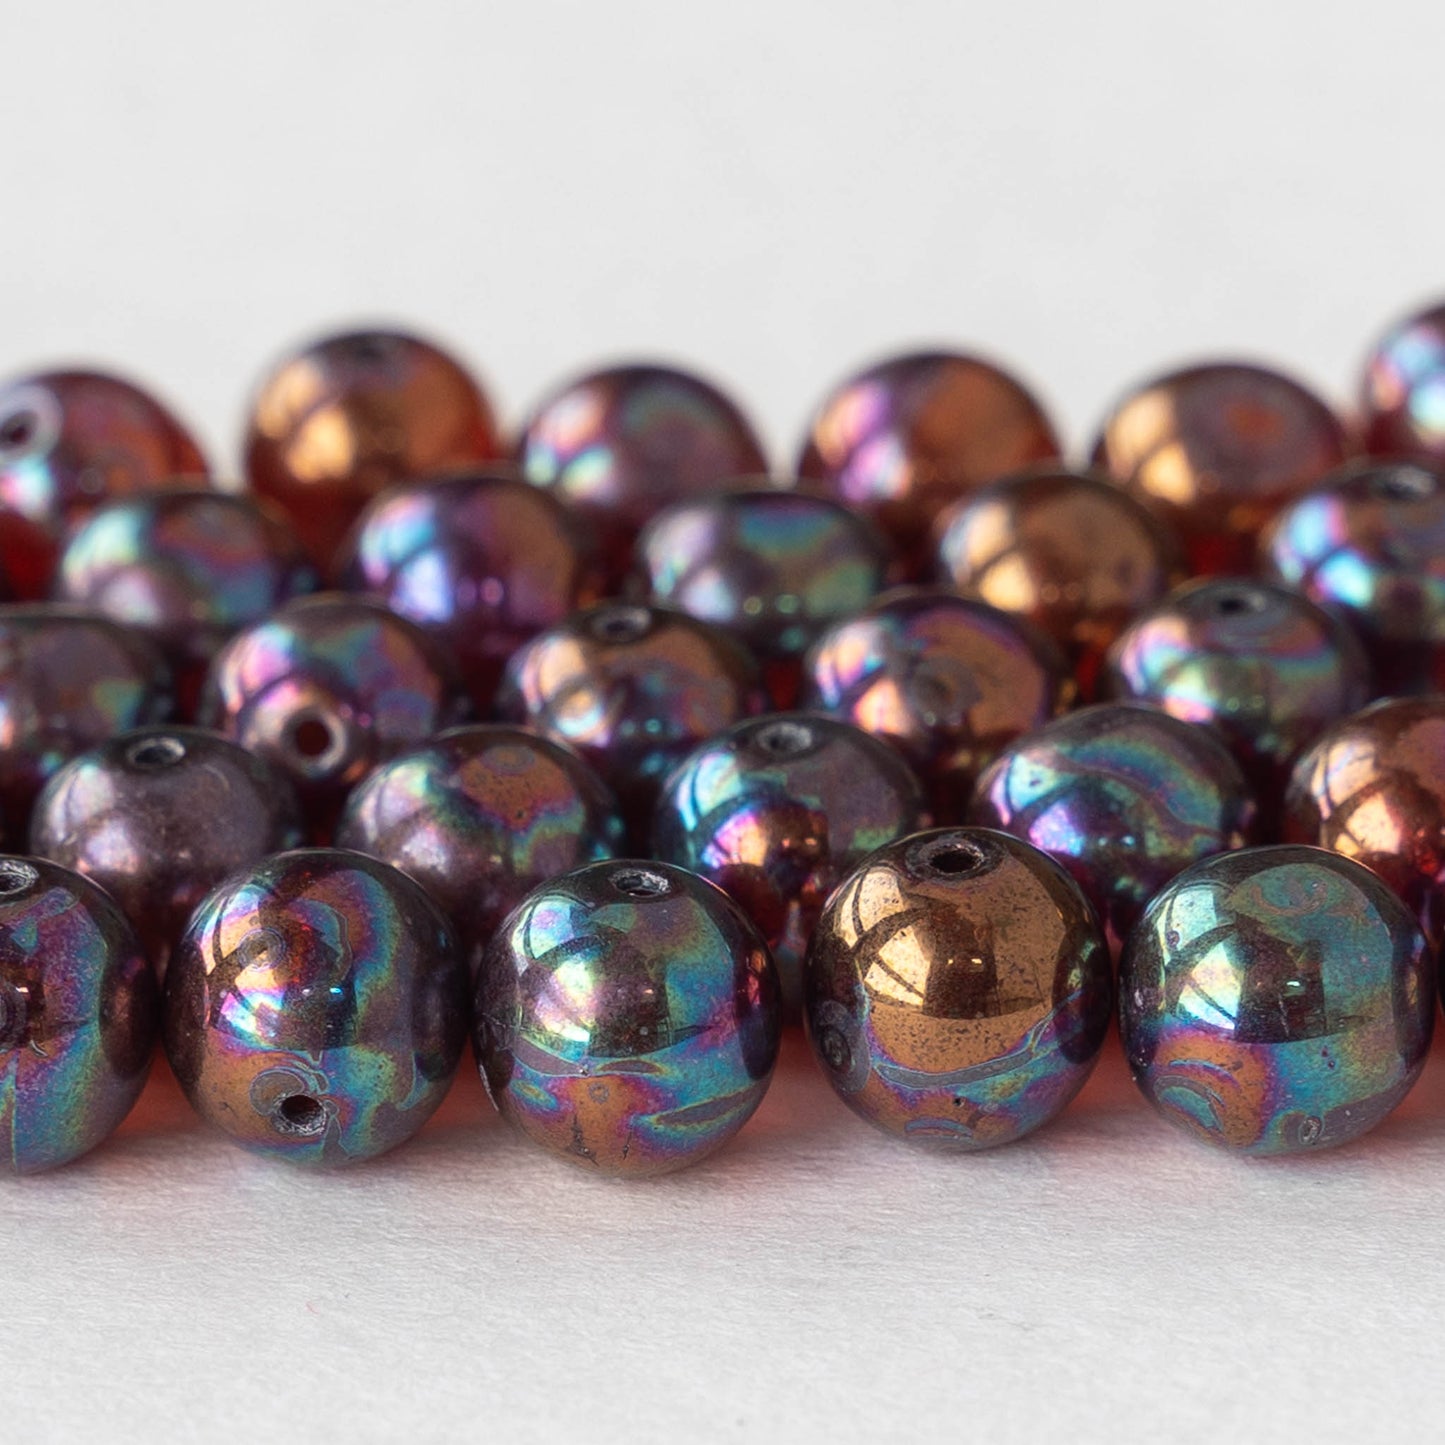 Bead, iridescent glass, translucent matte purple, 8mm round. Sold